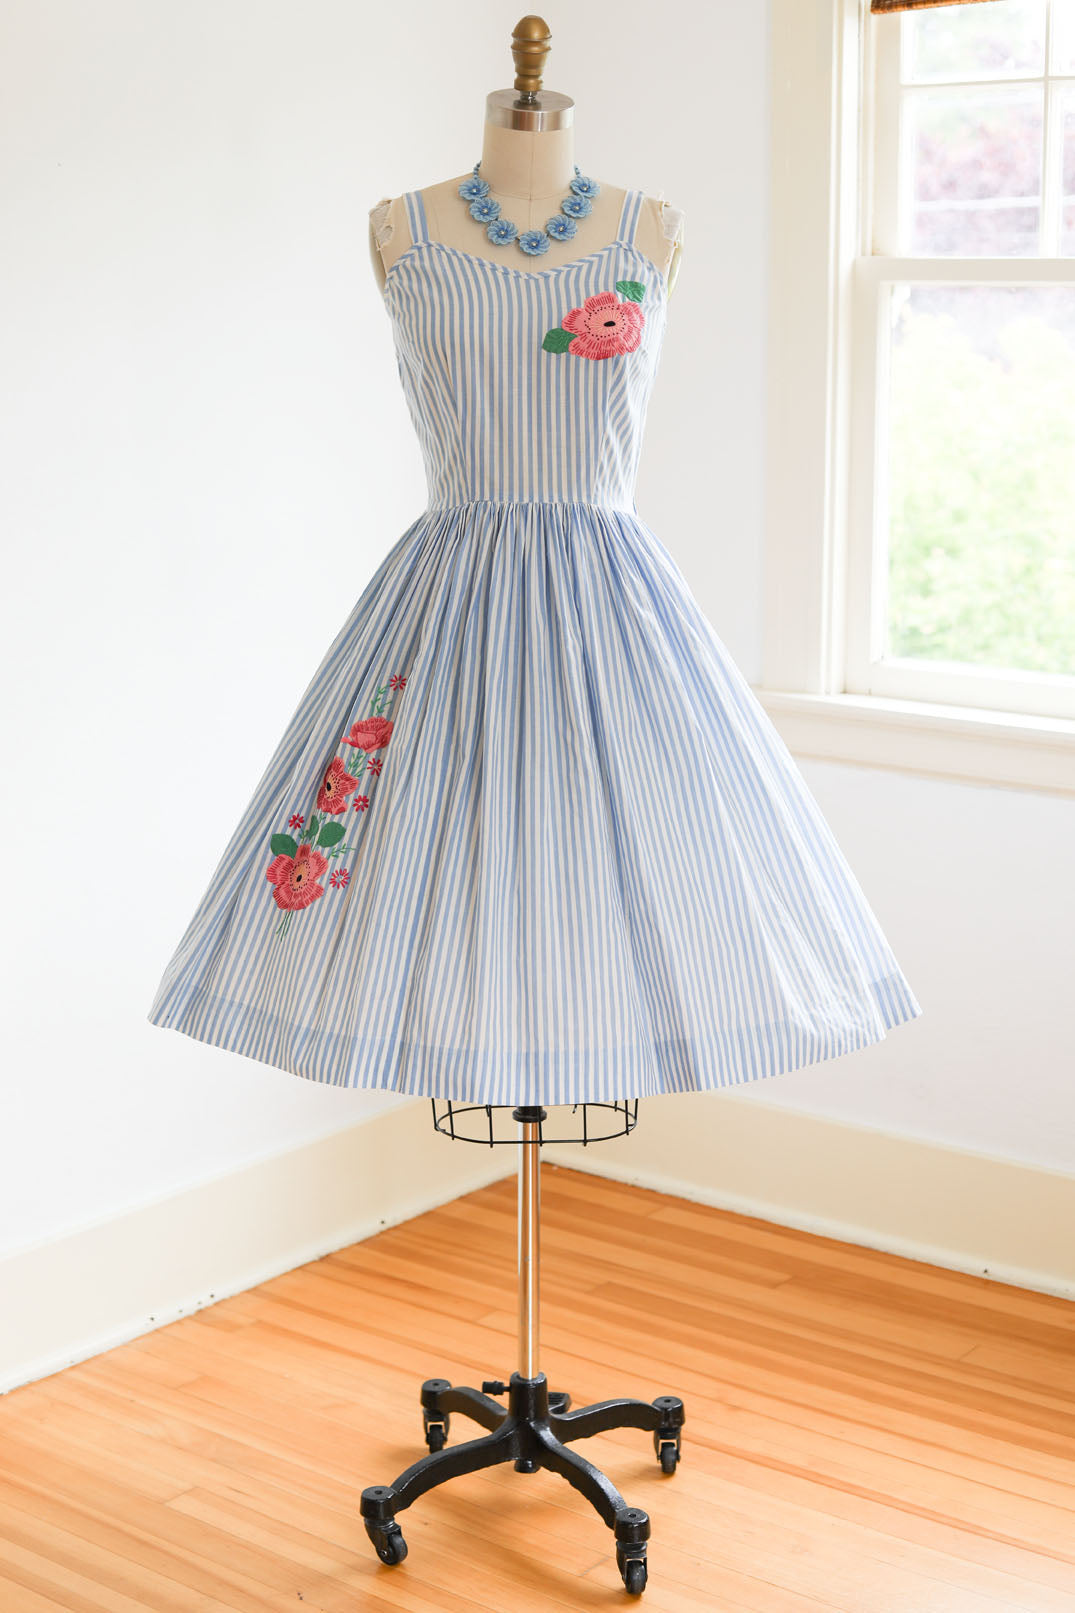 Vintage 1950s Dress - Darling Blue Hickory Striped Cotton w Pink Hand-Embroidered Floral Appliqués Sundress Size S